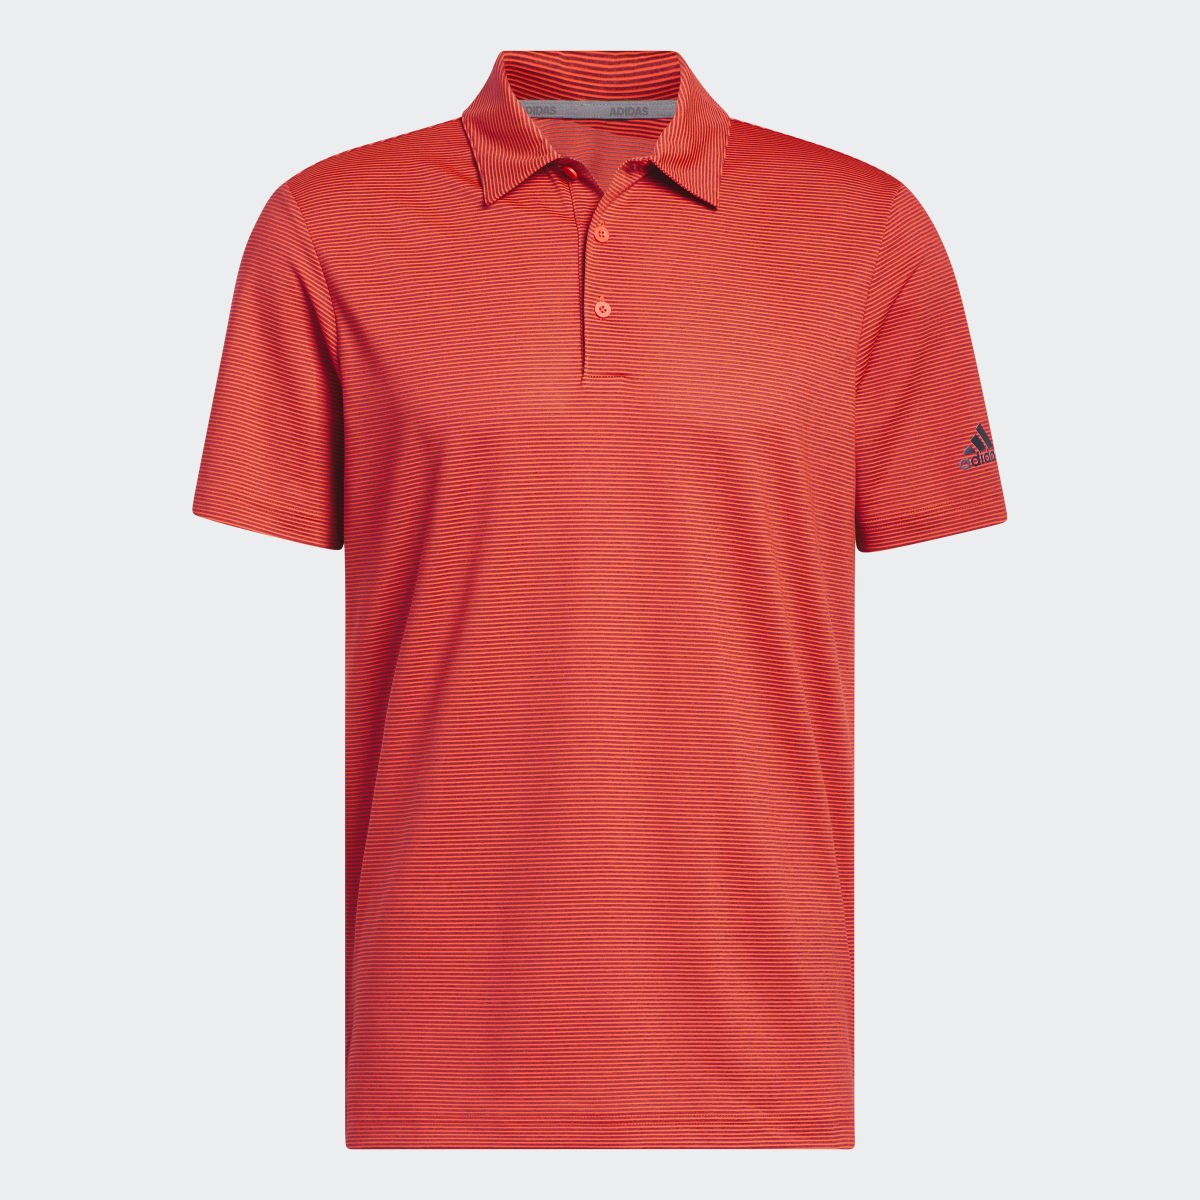 Adidas Ottoman Stripe Golf Polo Shirt. 5